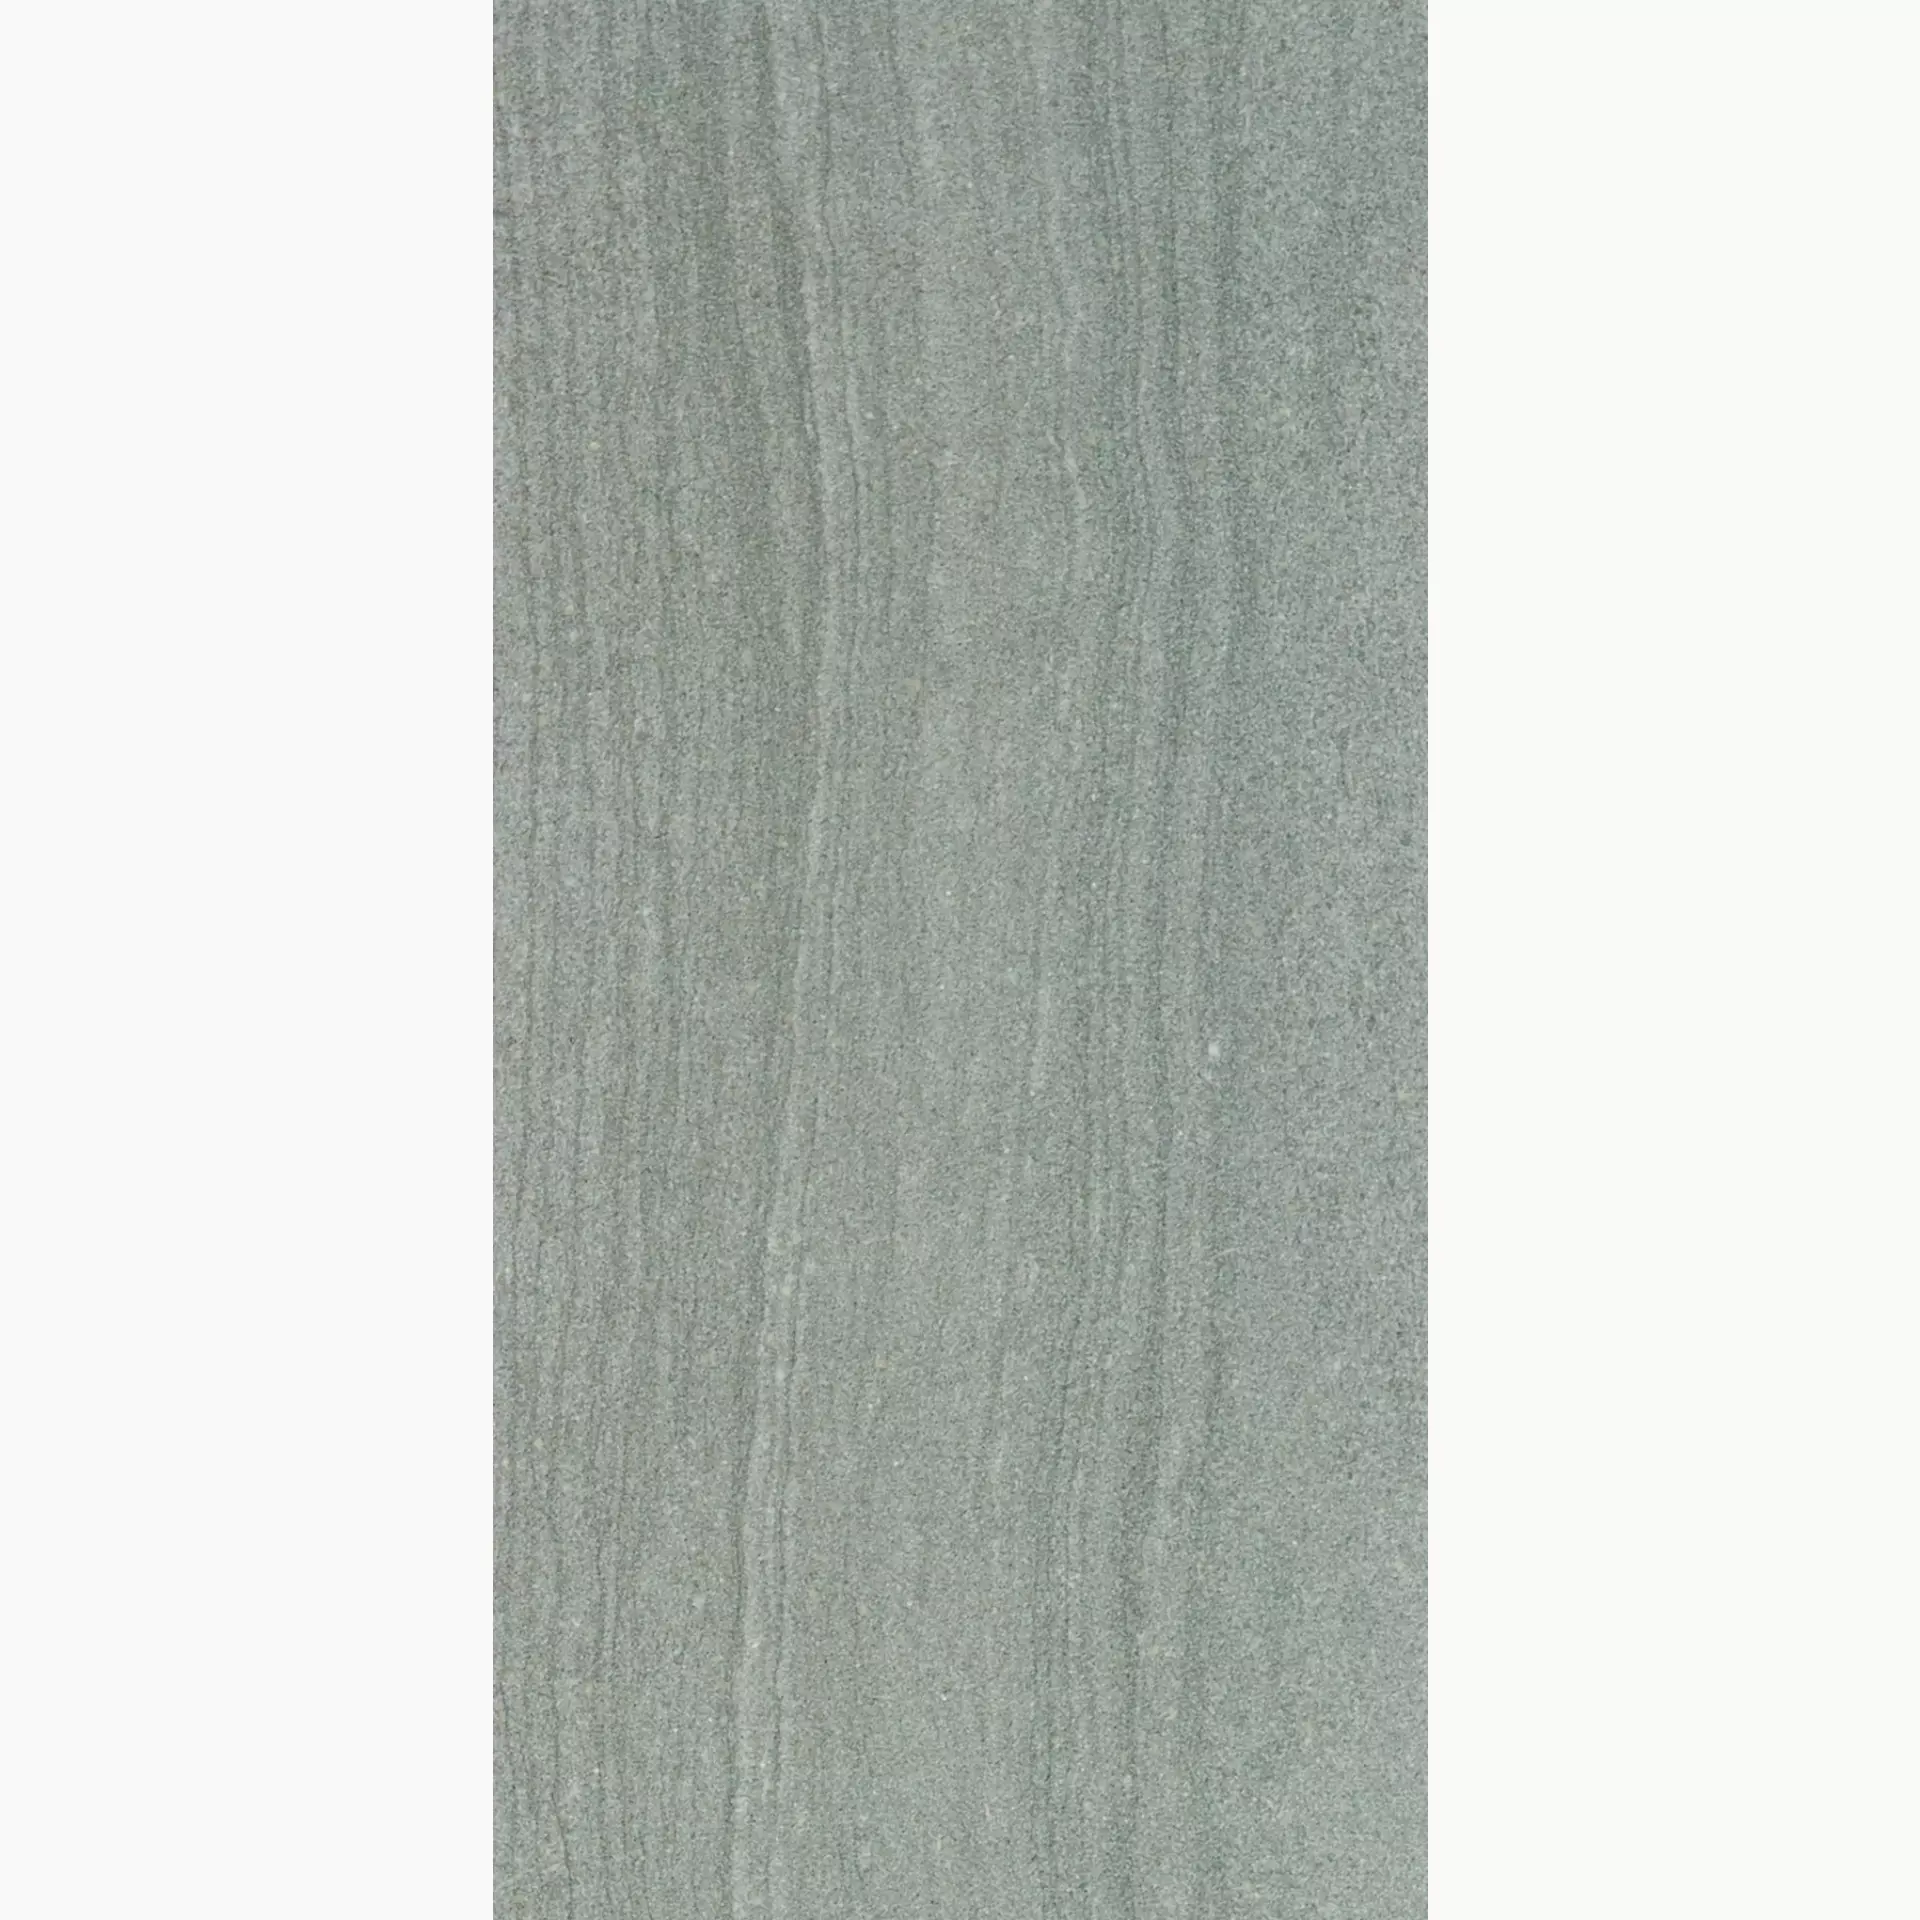 Ergon Stone Project Grey Naturale Falda E1DH 30x60cm rectified 9,5mm